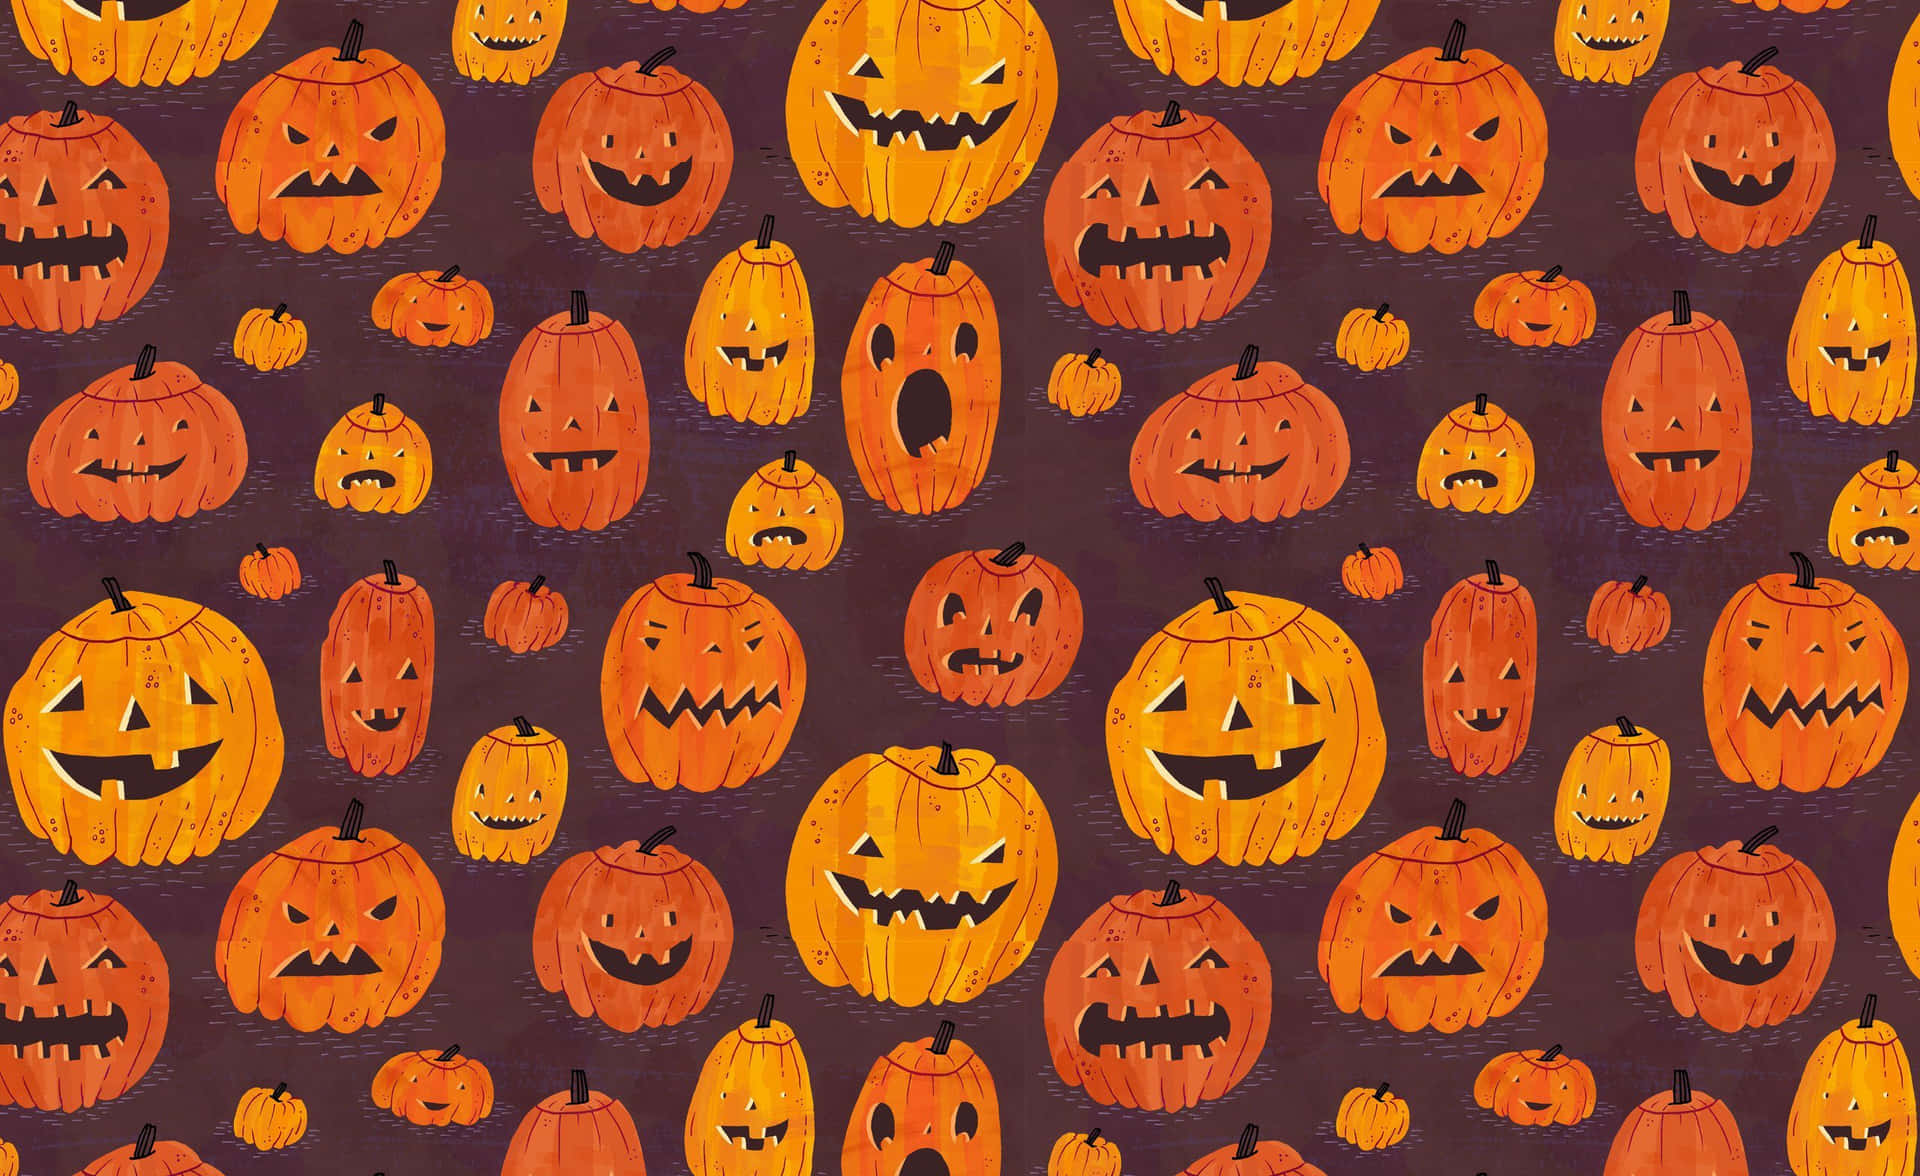 A whimsical autumn pumpkin patch scene